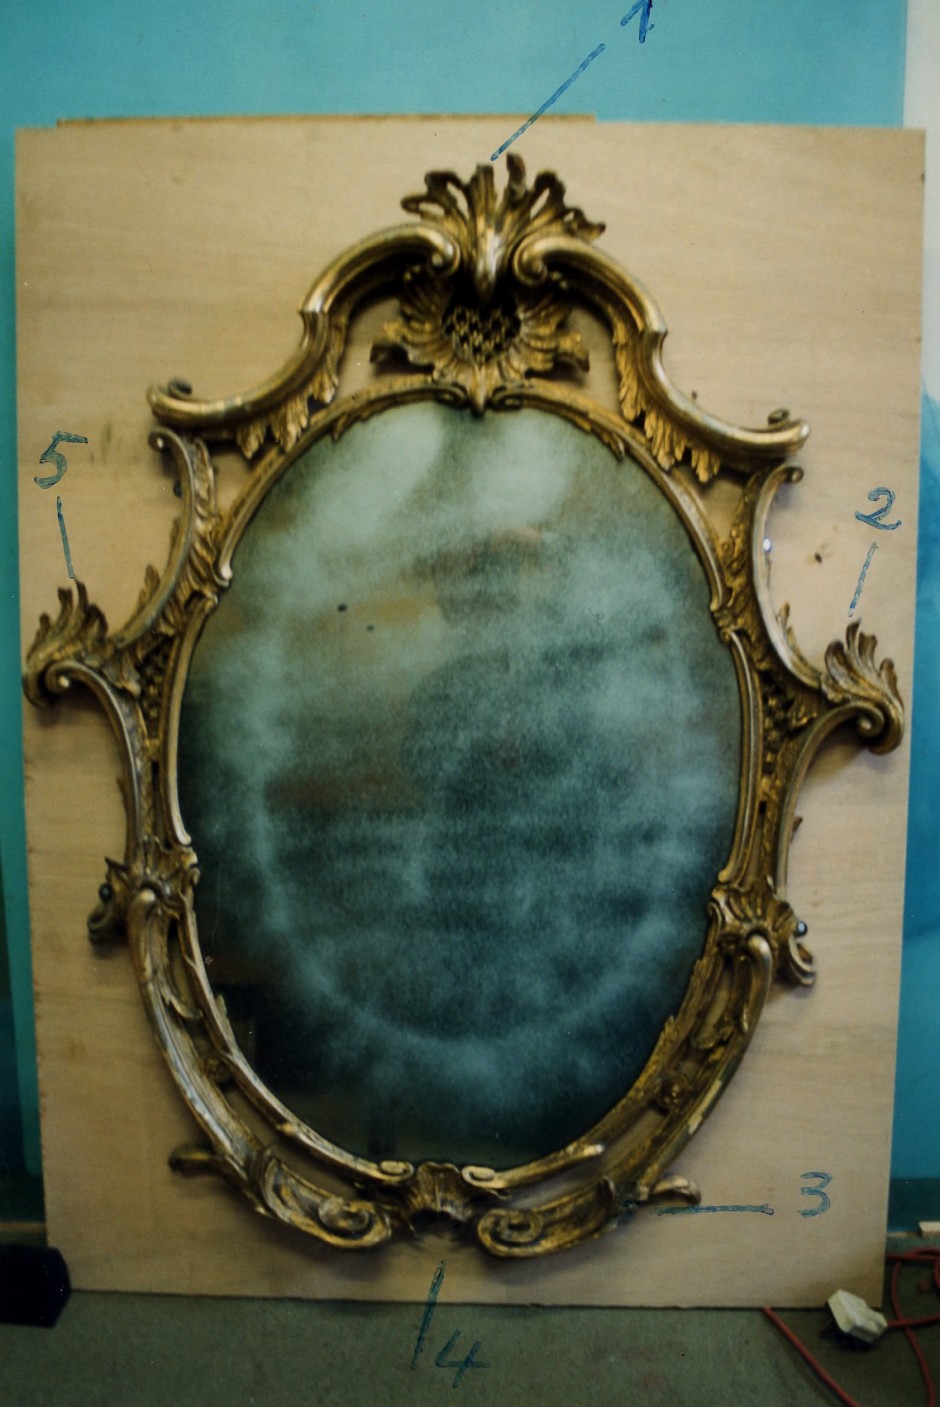 The original mirror prior to restoration - mirror needing restoration